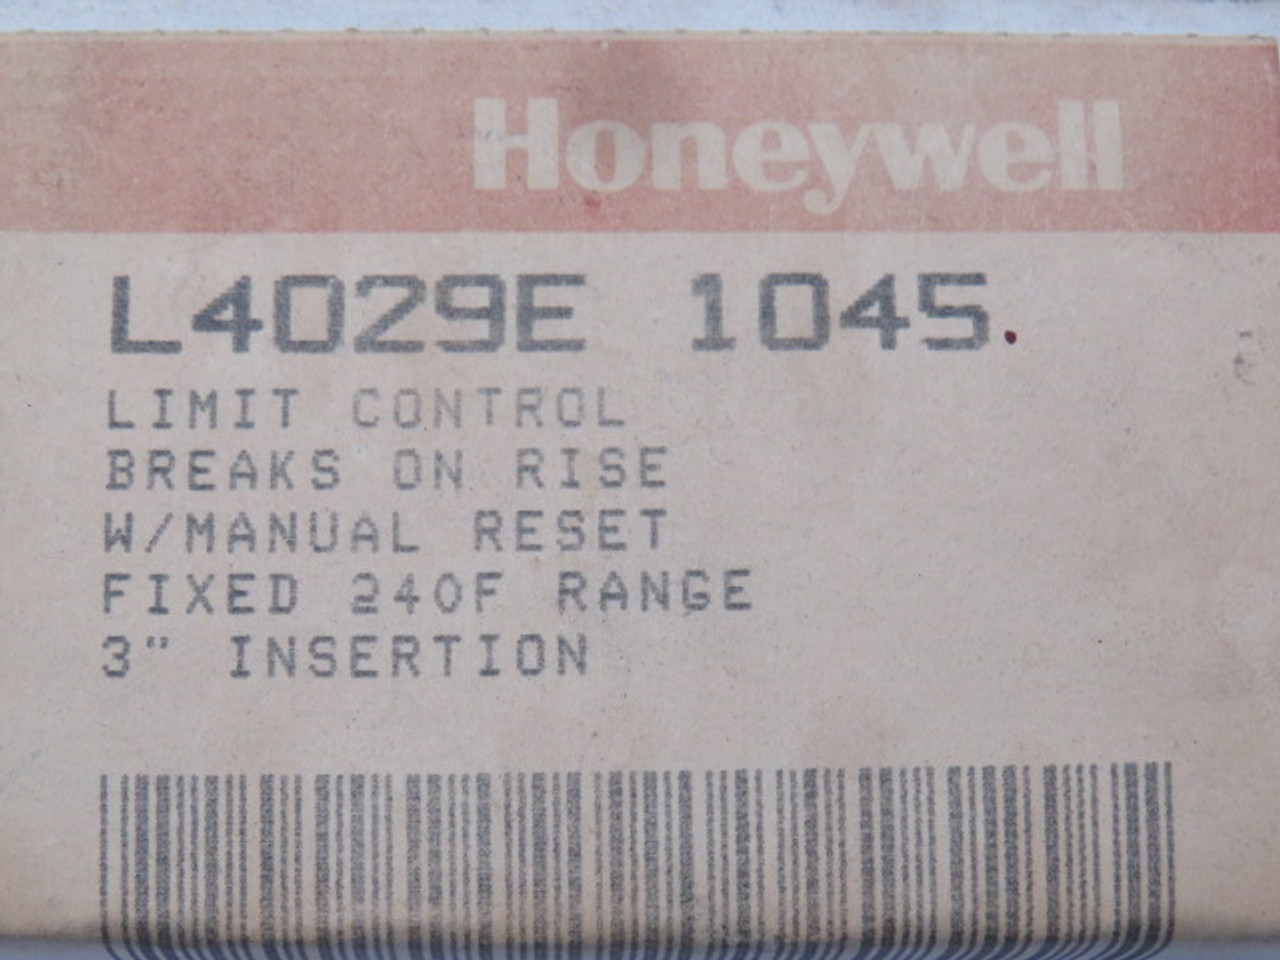 Honeywell L4029E-1045 Limit Switch 3" Insertion Fixed 240F Range ! NEW !